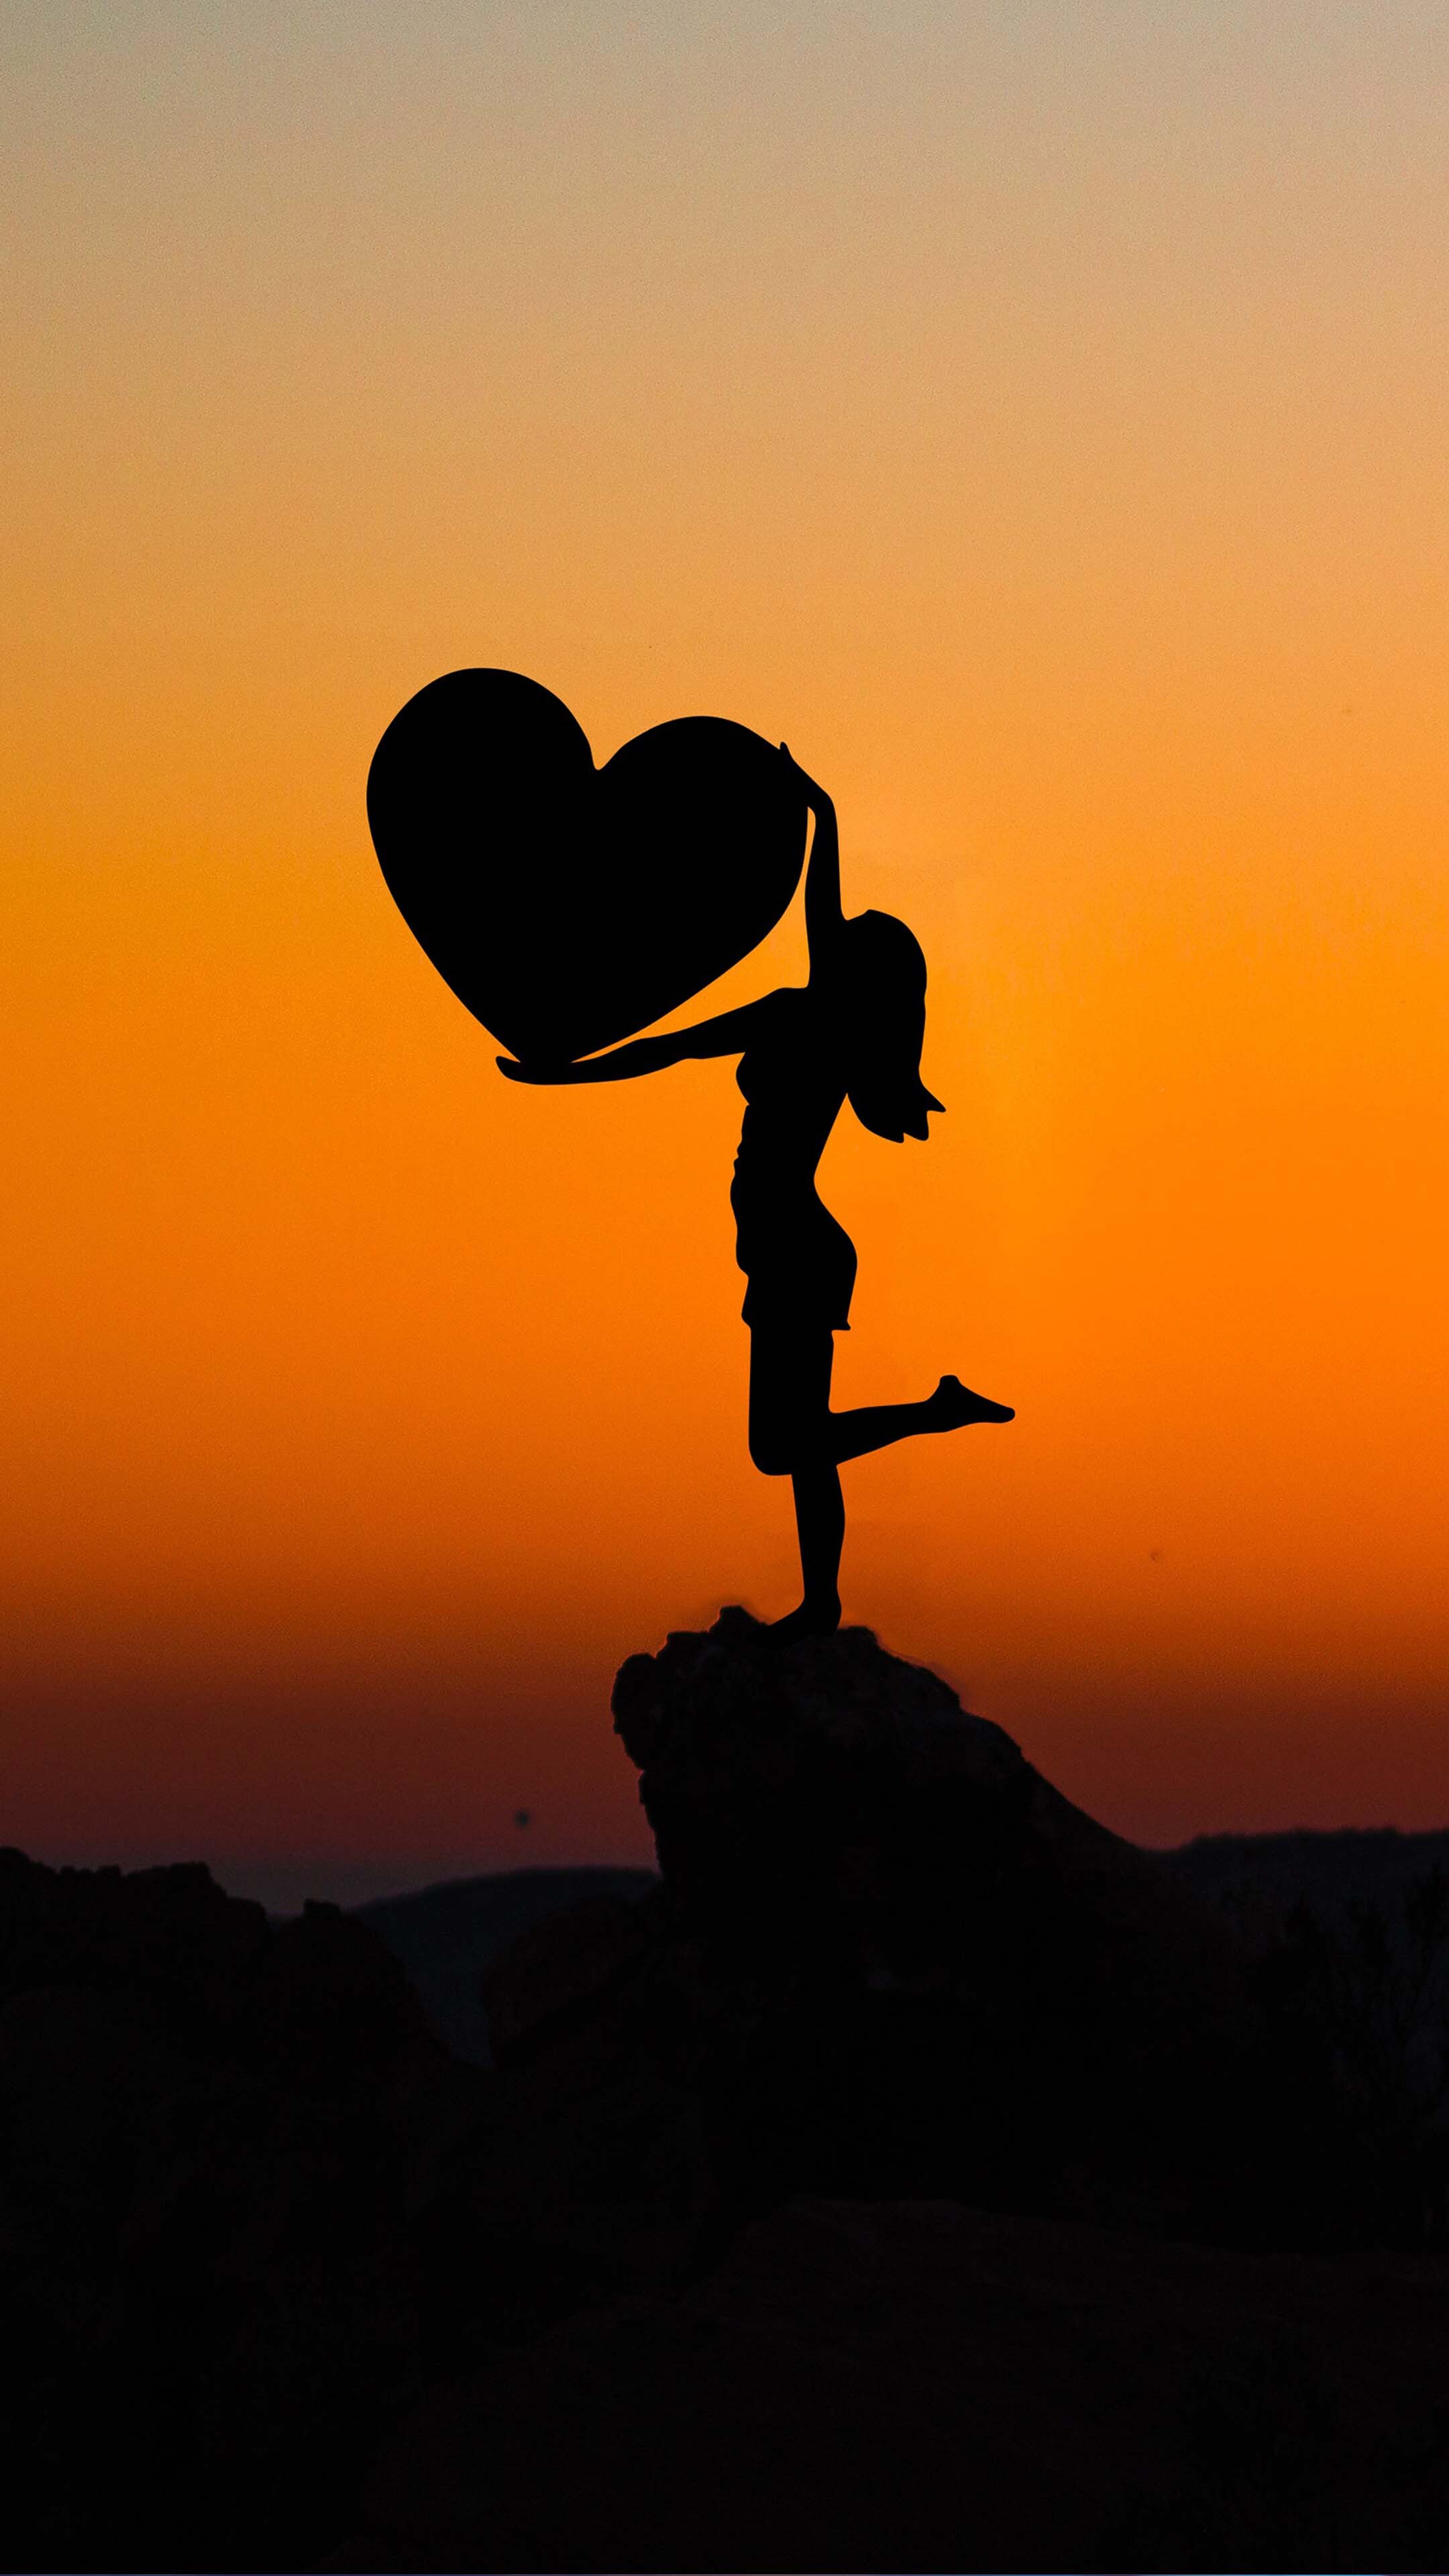 Girly: Sunset, Romantic, Silhouette, The girl standing on the rock, Heart. 2160x3840 4K Wallpaper.